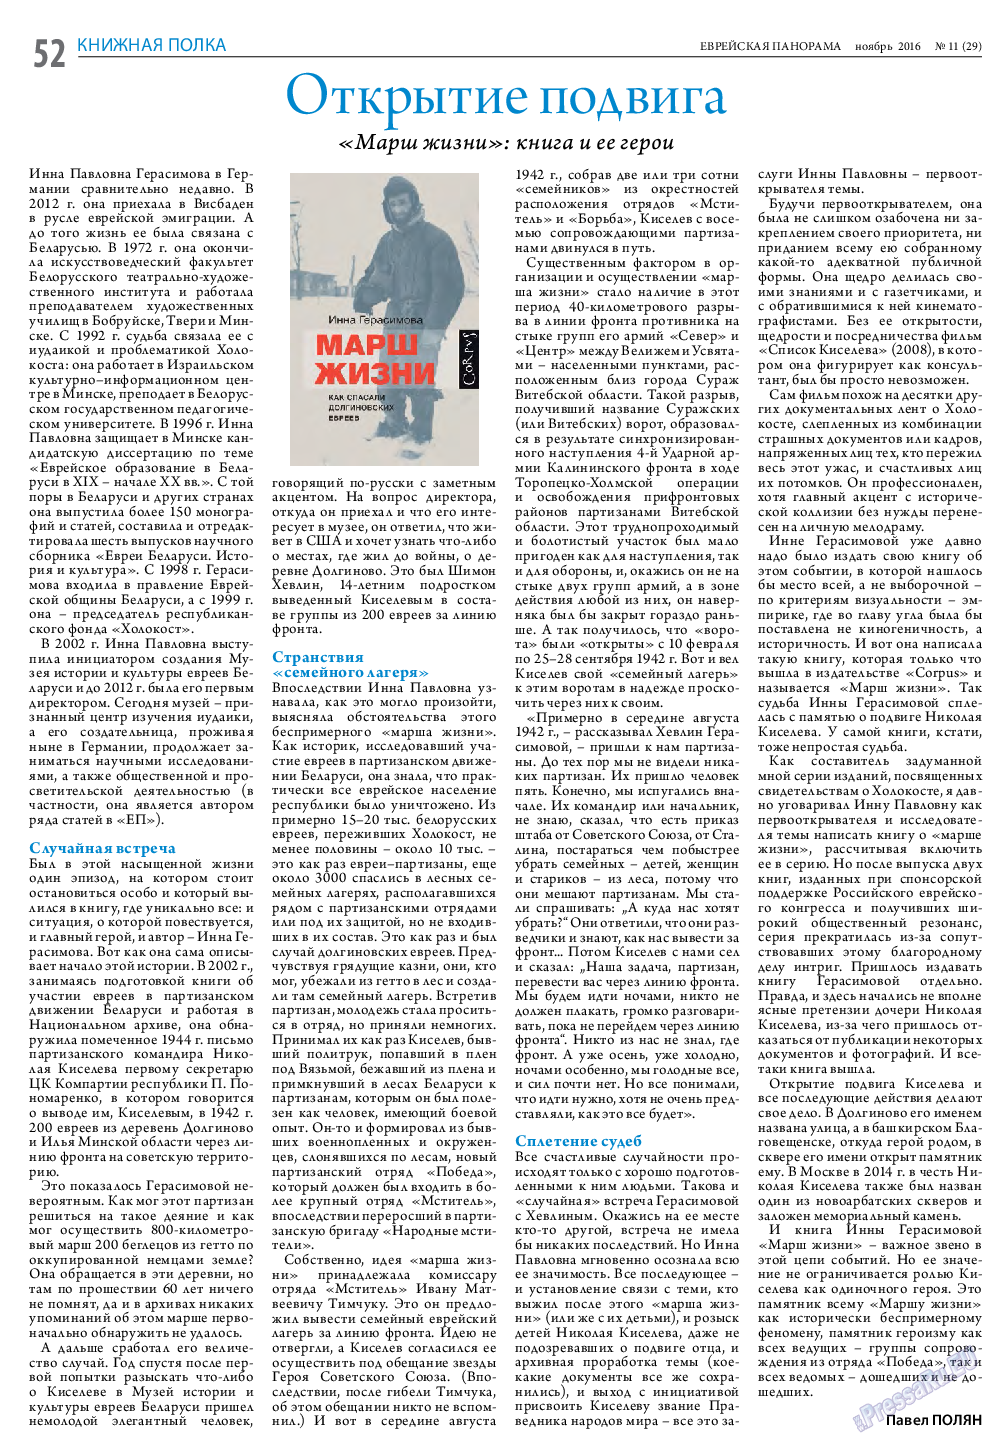 Еврейская панорама, газета. 2016 №11 стр.52